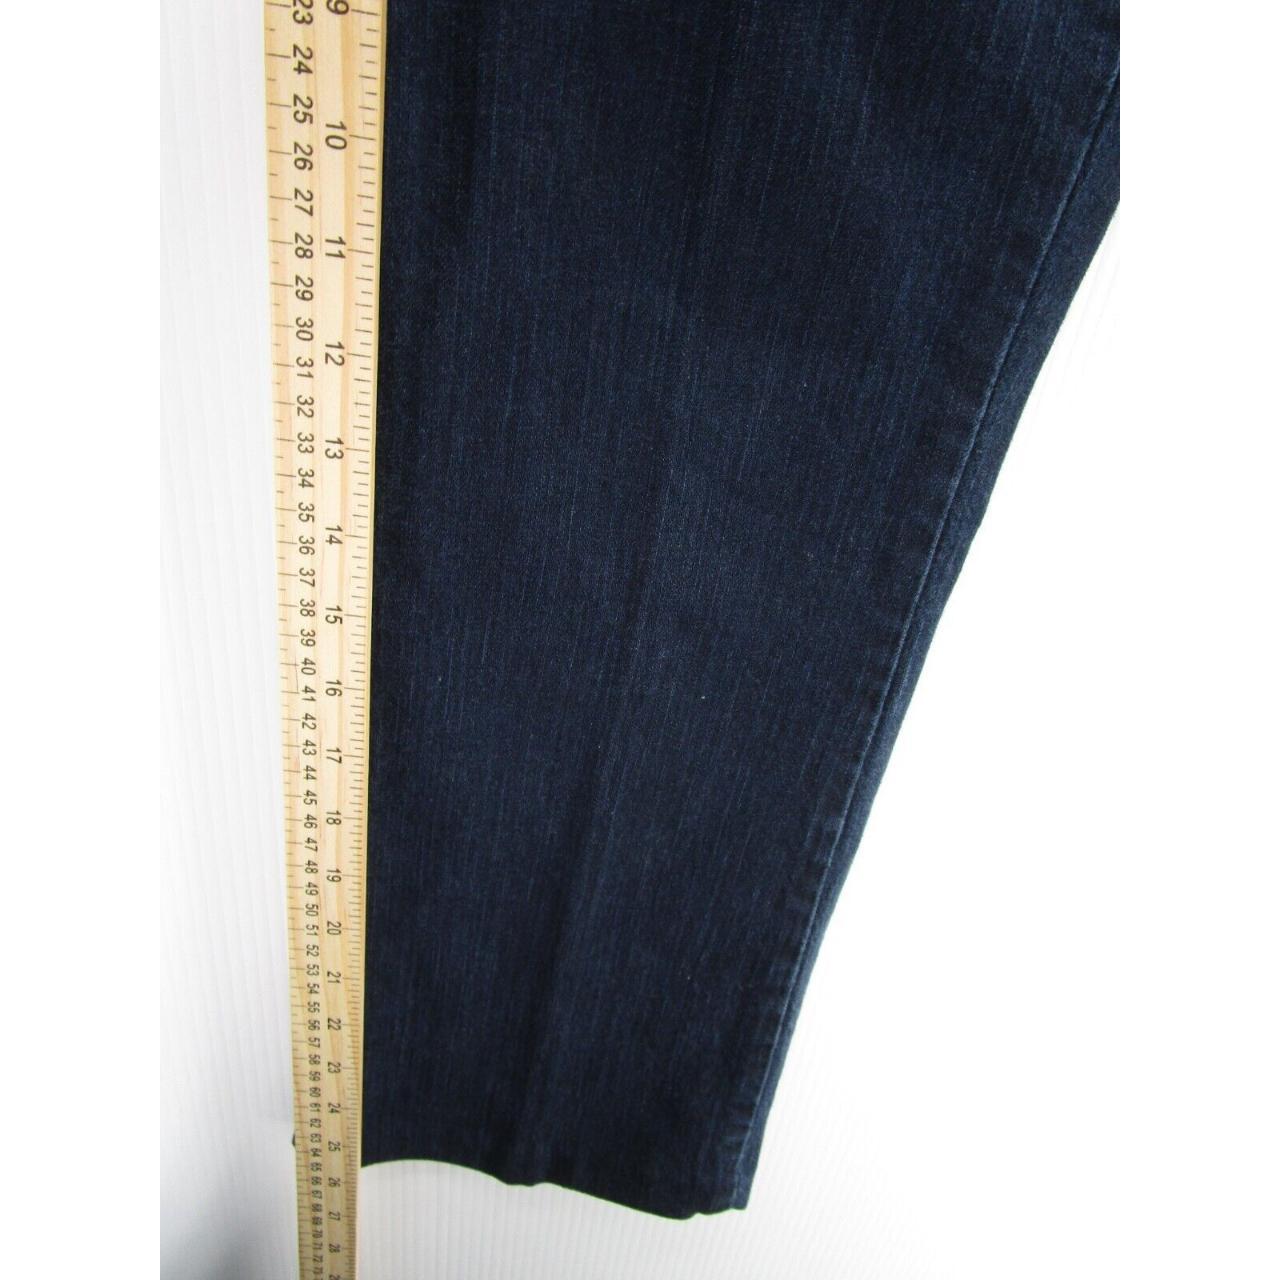 Simply Vera Vera Wang Denim Bootcut Jeans Women's 6 Black Low Rise 5-Pocket